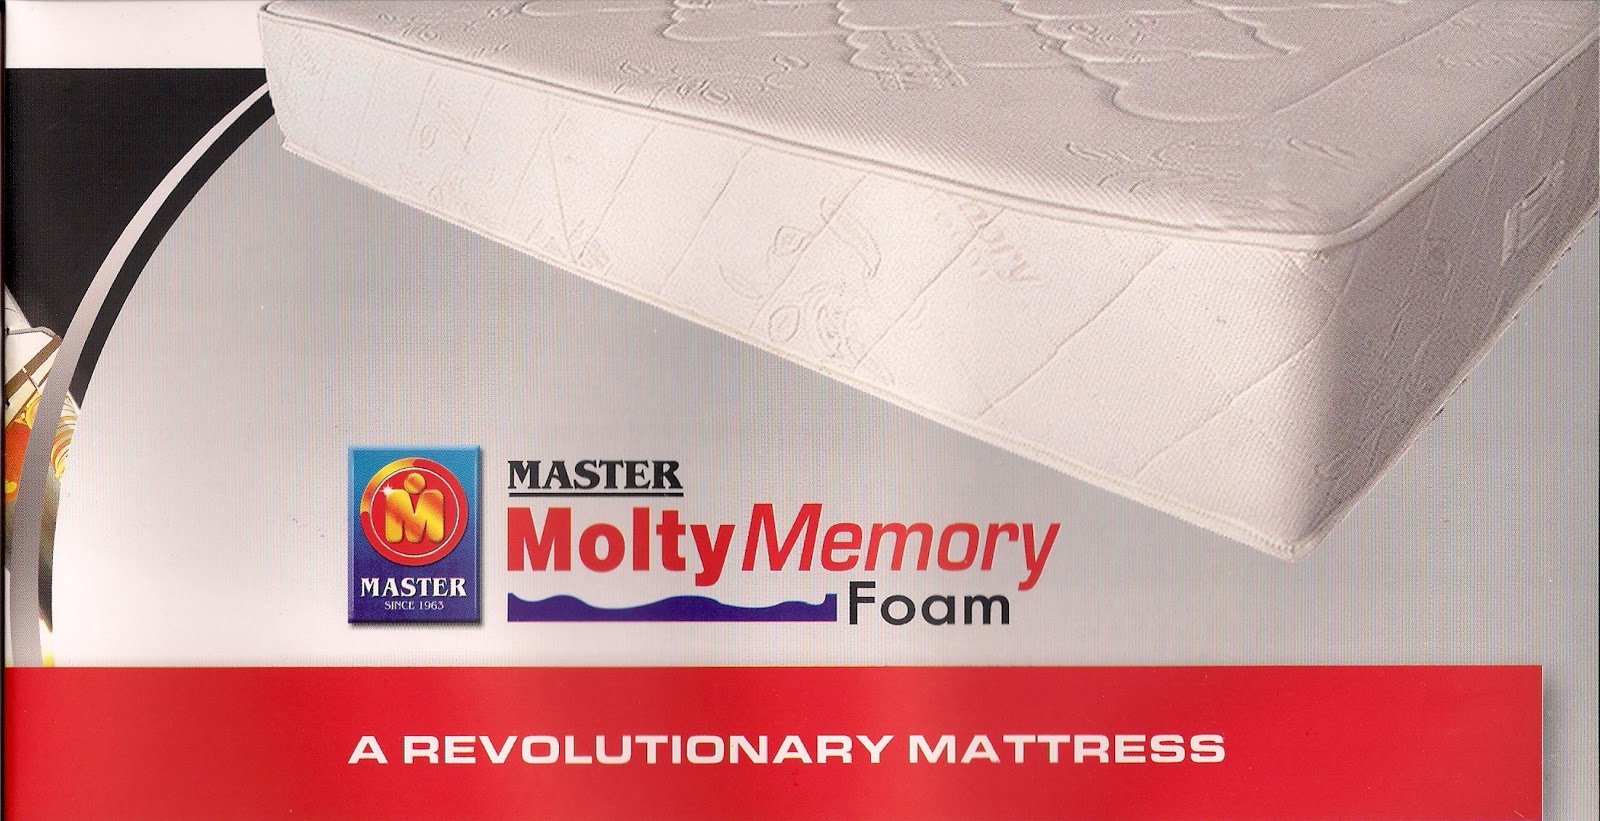 master celeste mattress price in pakistan